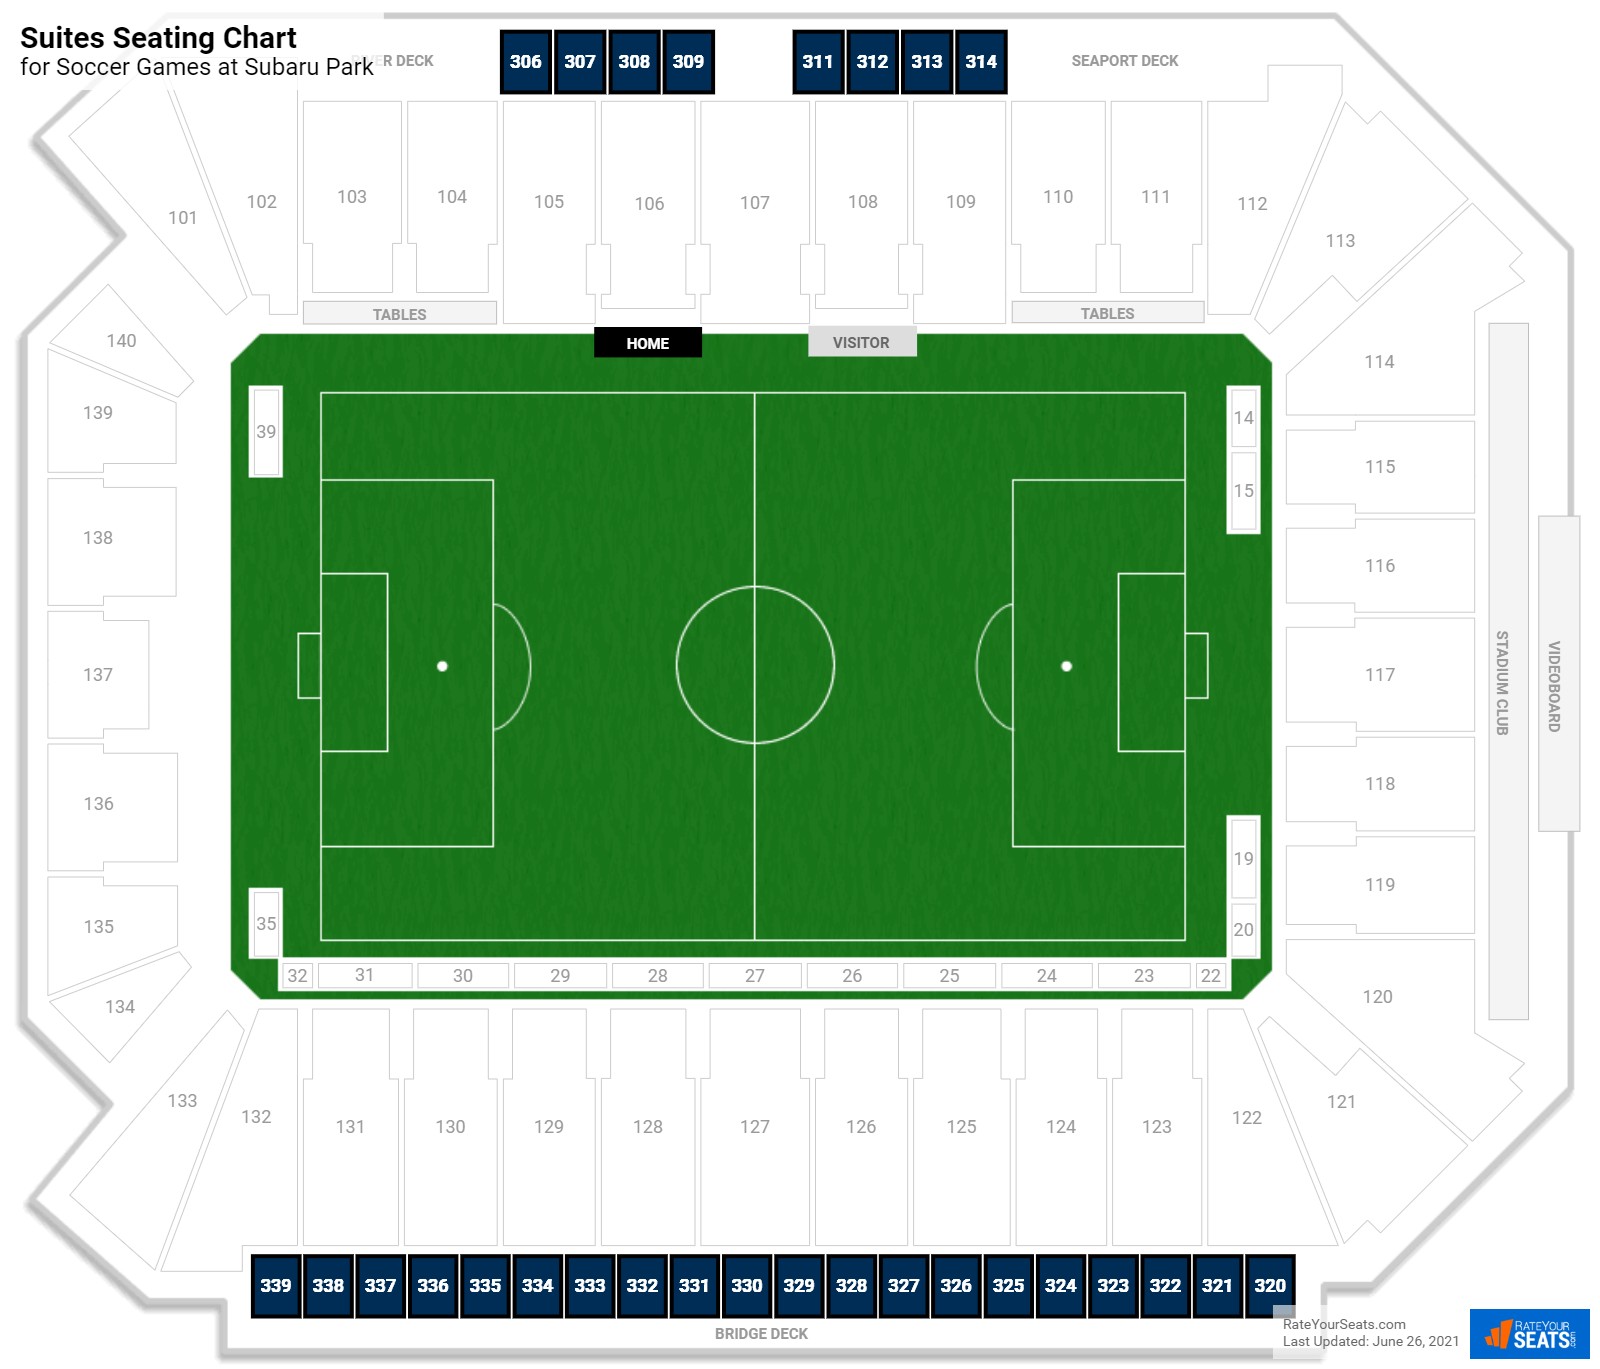 Soccer Suites Seating Chart at Subaru Park